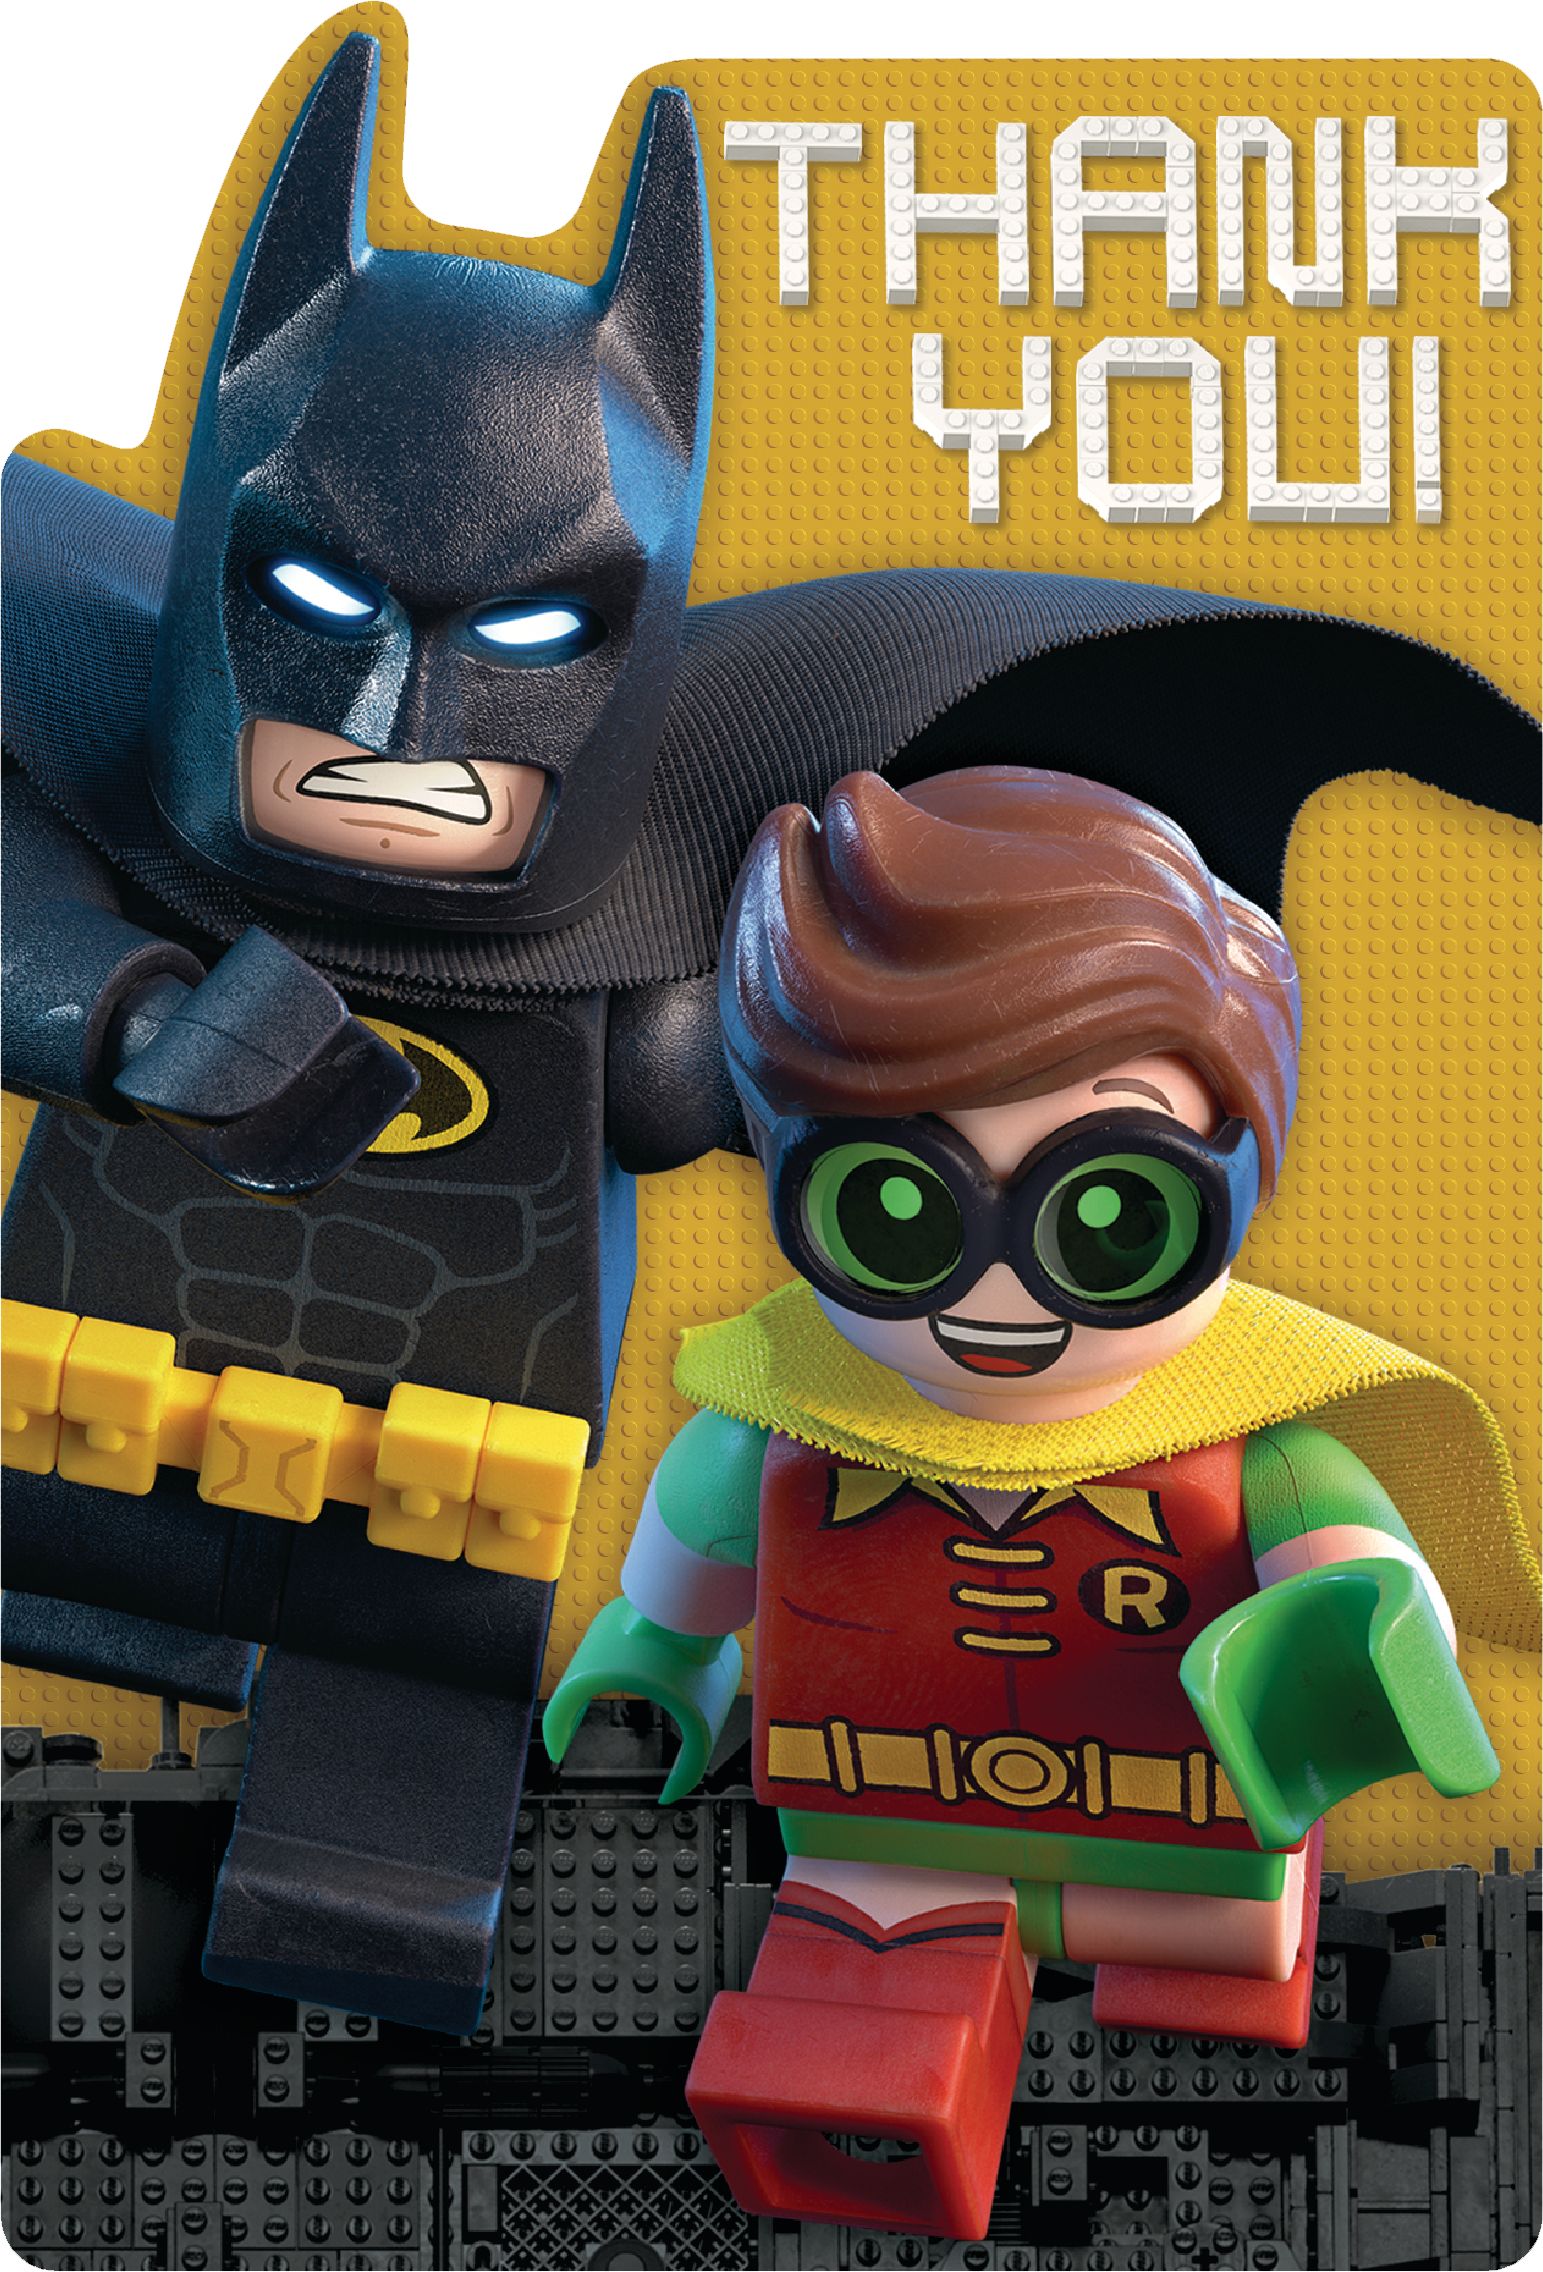 Lego Batman Movie Thank You Notes, 8-pk